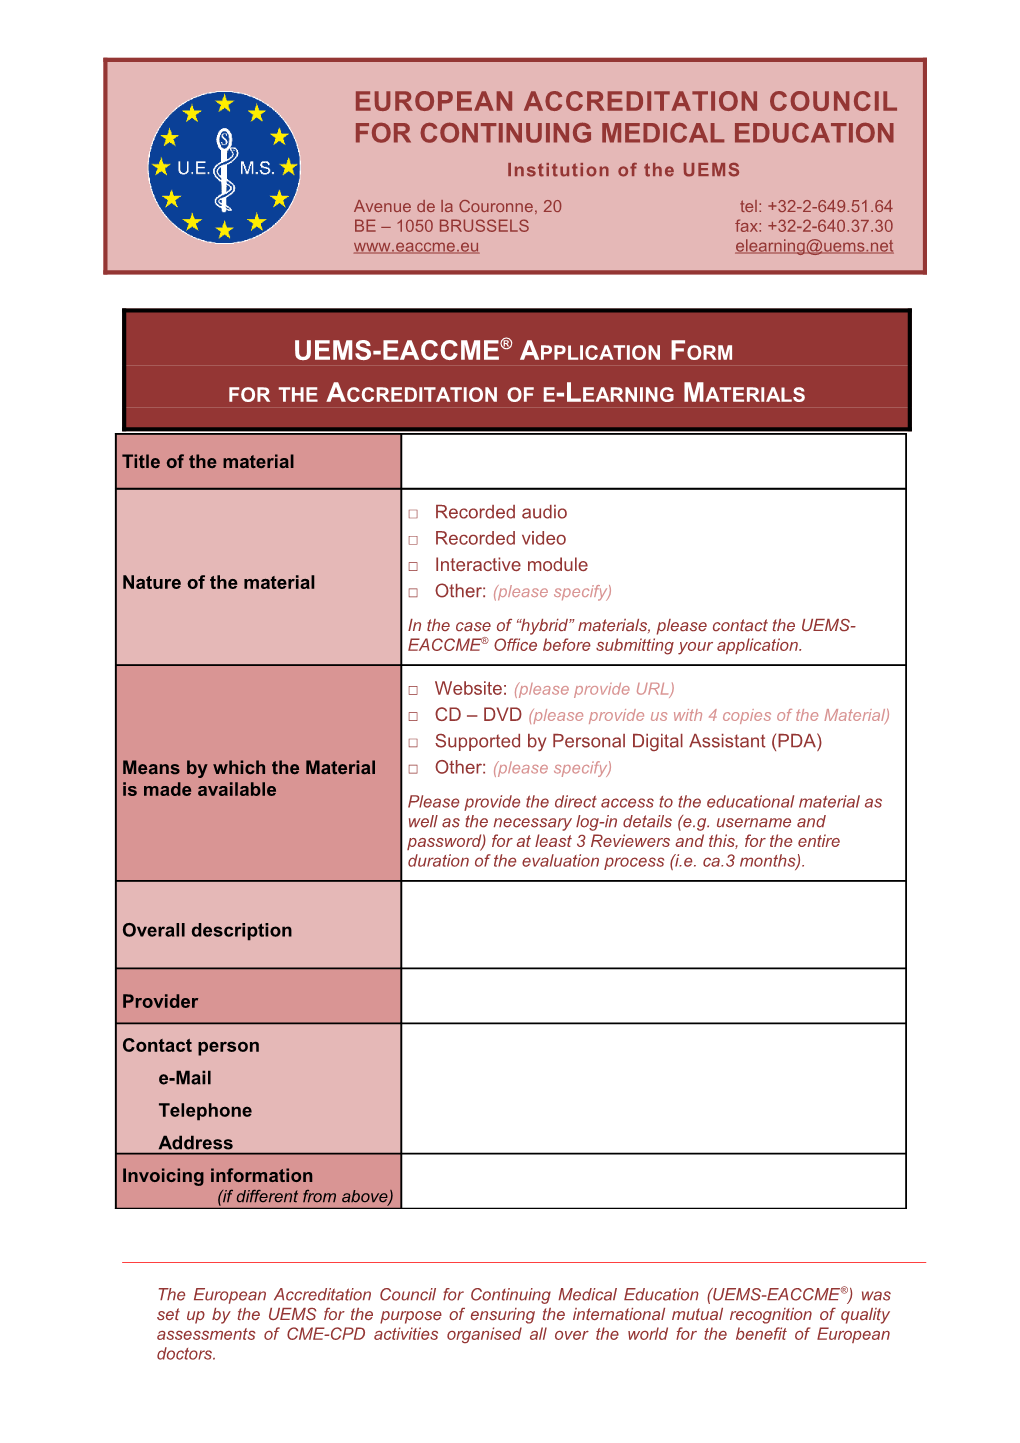 UEMS-EACCME Application Form